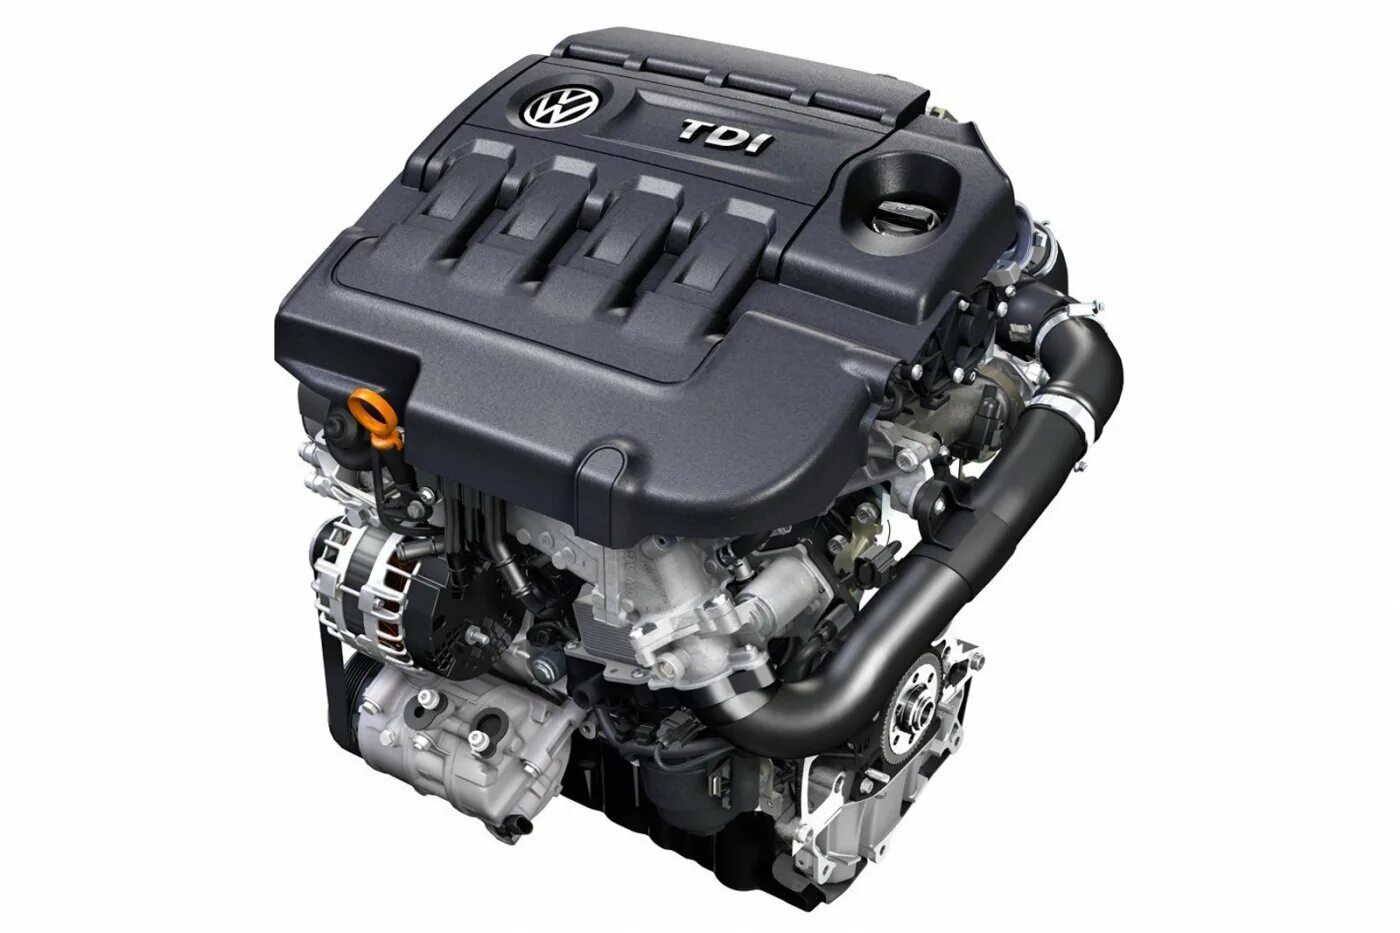 1.3 л 150 л с. Двигатель VW 2.0 TDI. Ea288 2.0 TDI. Двигатель ea288 150 л.с 2.0 TDI. Двигатель DBGC 2.0 TDI.